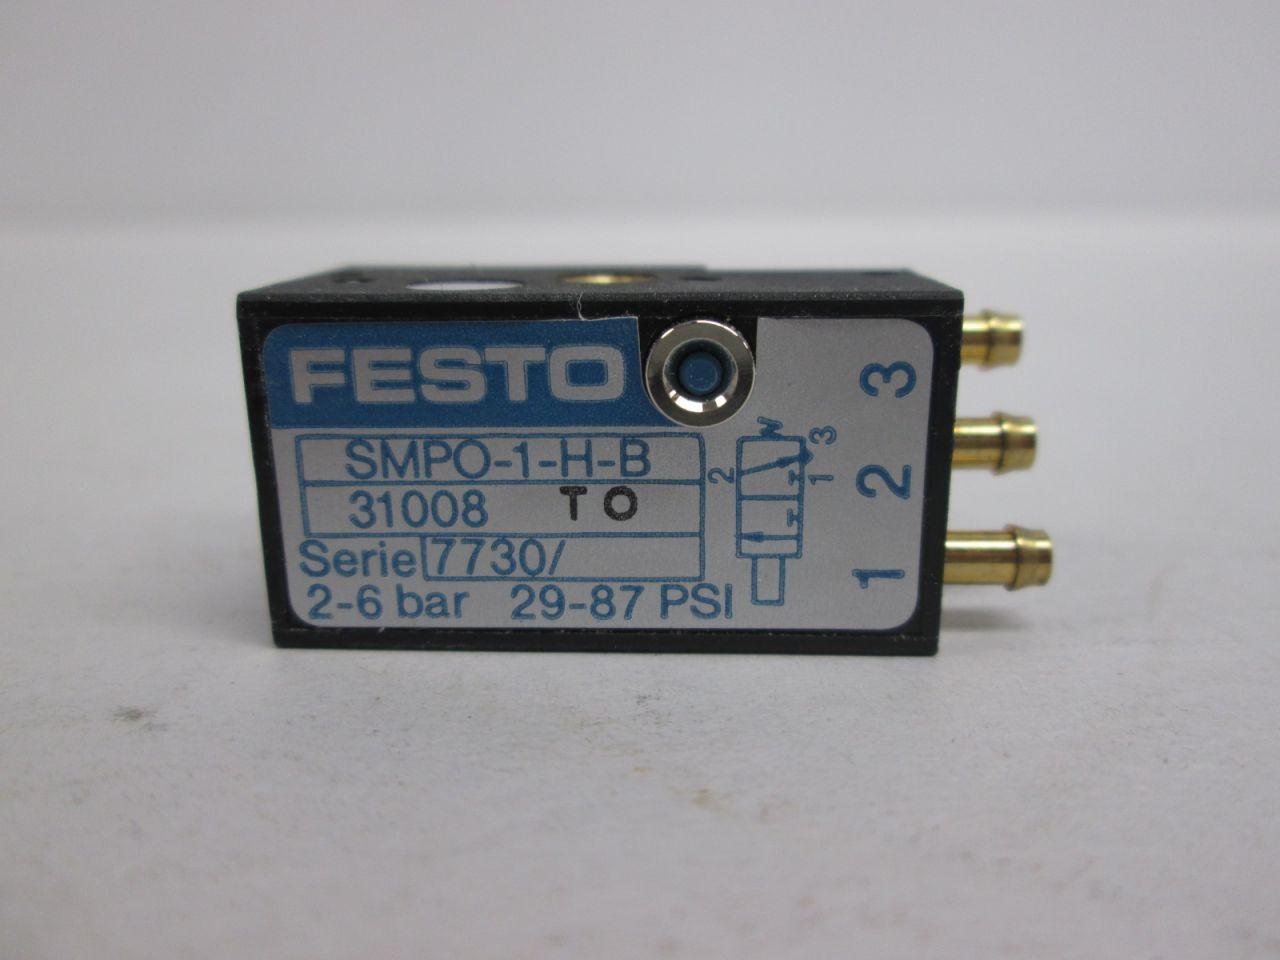 Festo SMPO-1-H-B Sensor 31008 2-6 Bar *FREE SHIPPING*